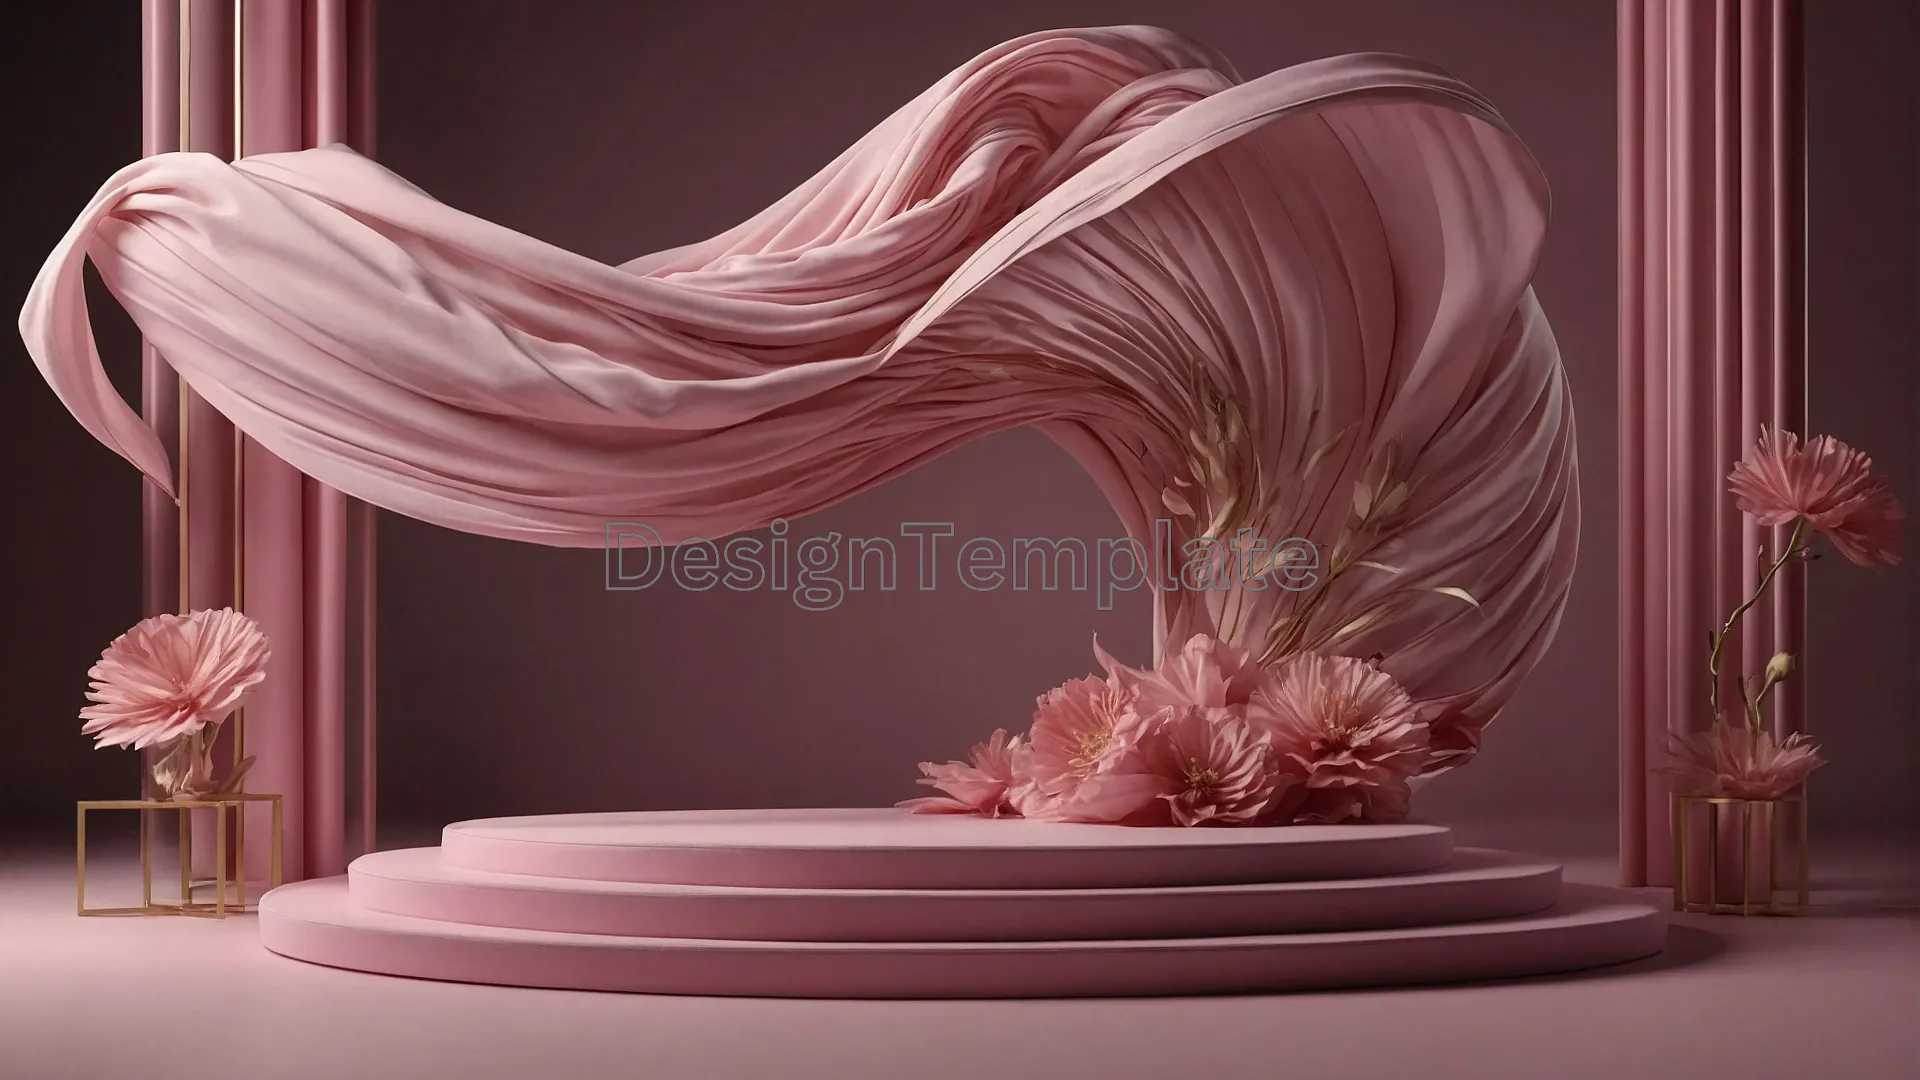 Luxurious Pink Cloth Draped on 3D Podium Photo image